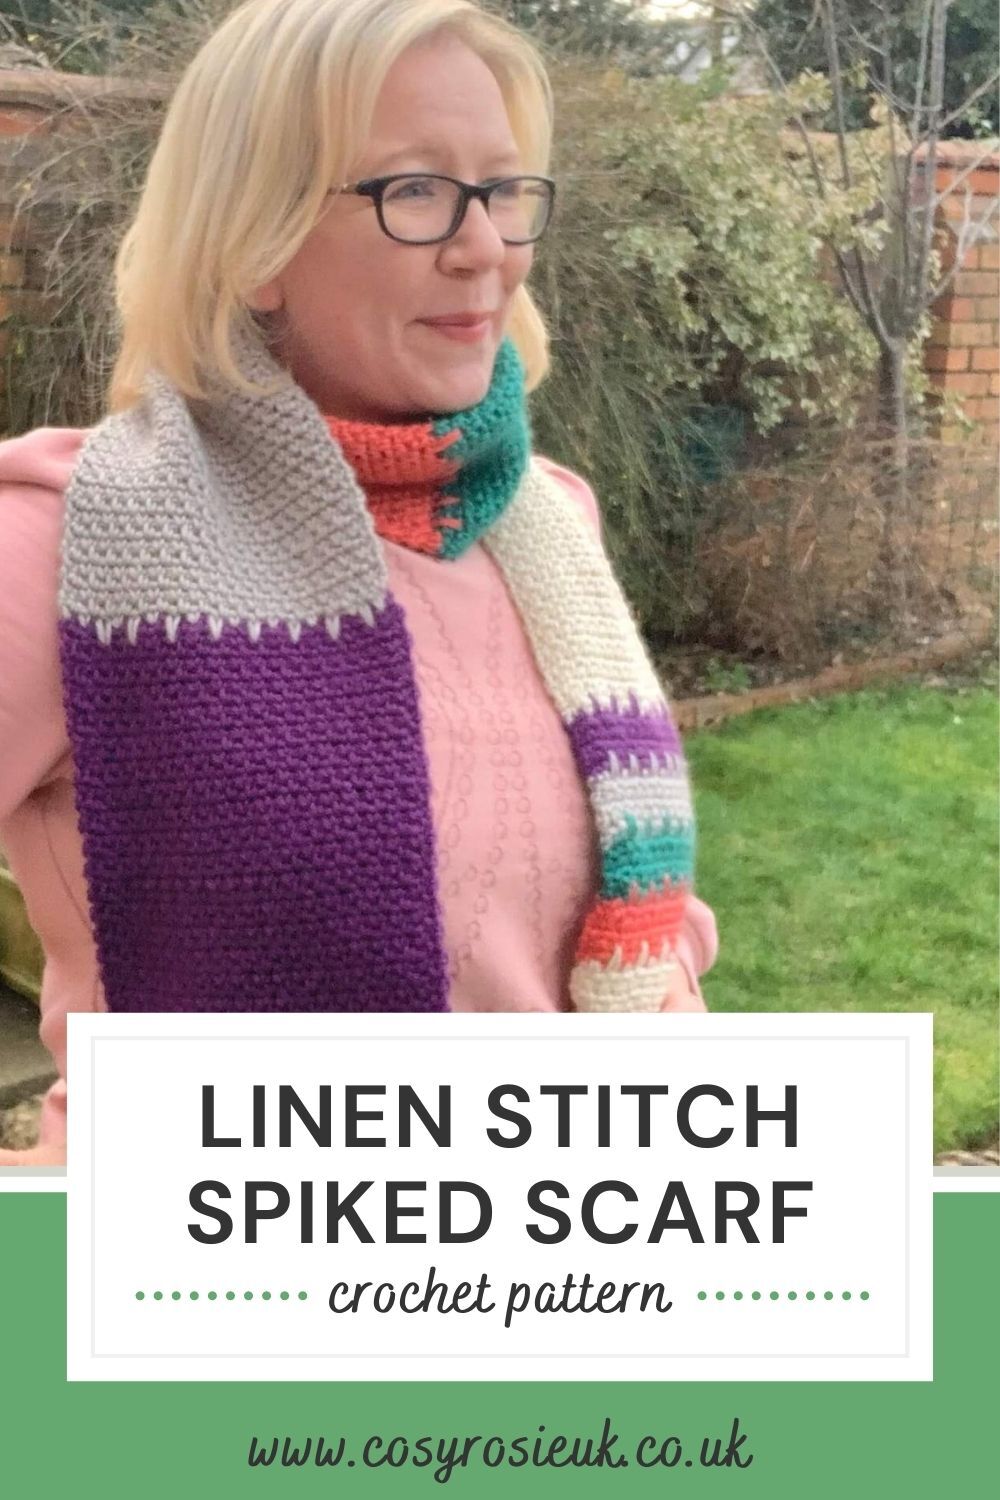 Linen stitch scarf pattern